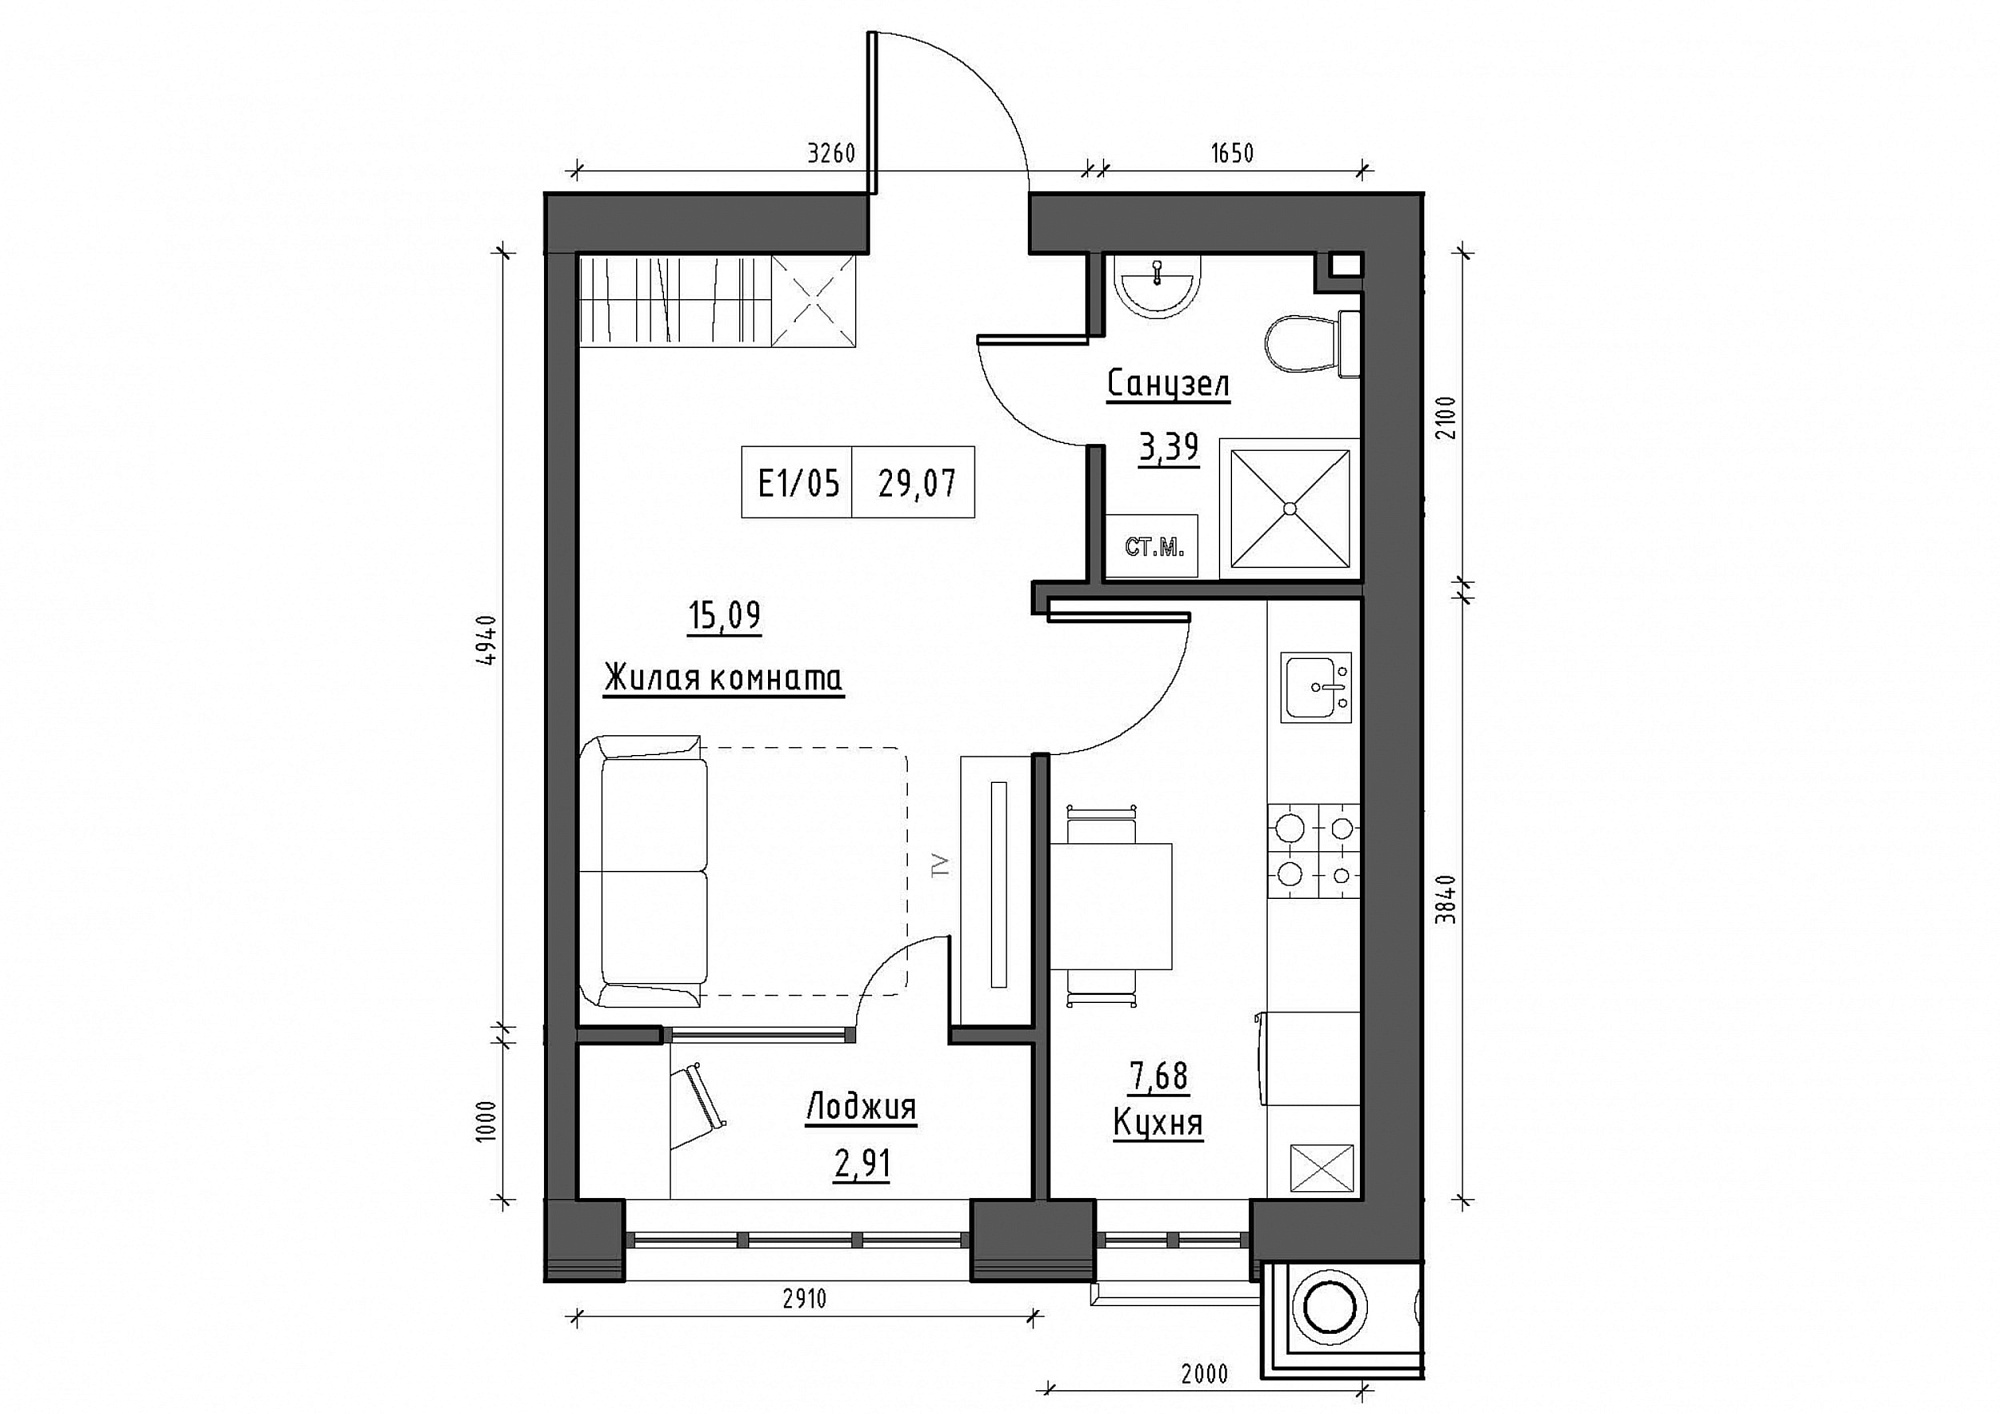 Planning 1-rm flats area 29.07m2, KS-011-04/0009.